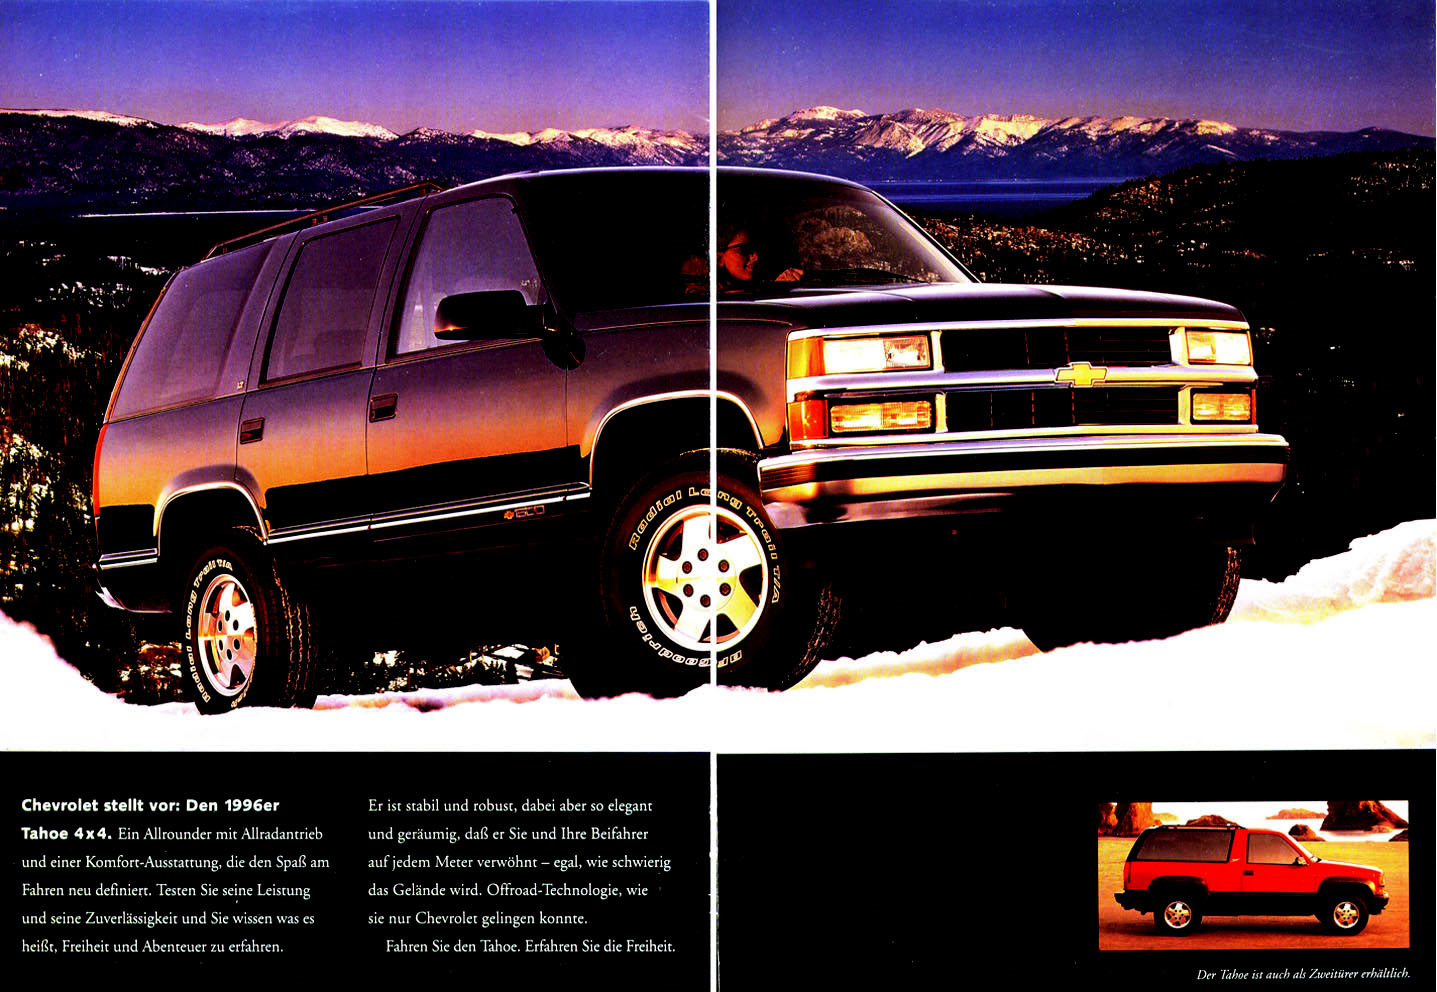 Chevrolet tahoe и suburban отличия